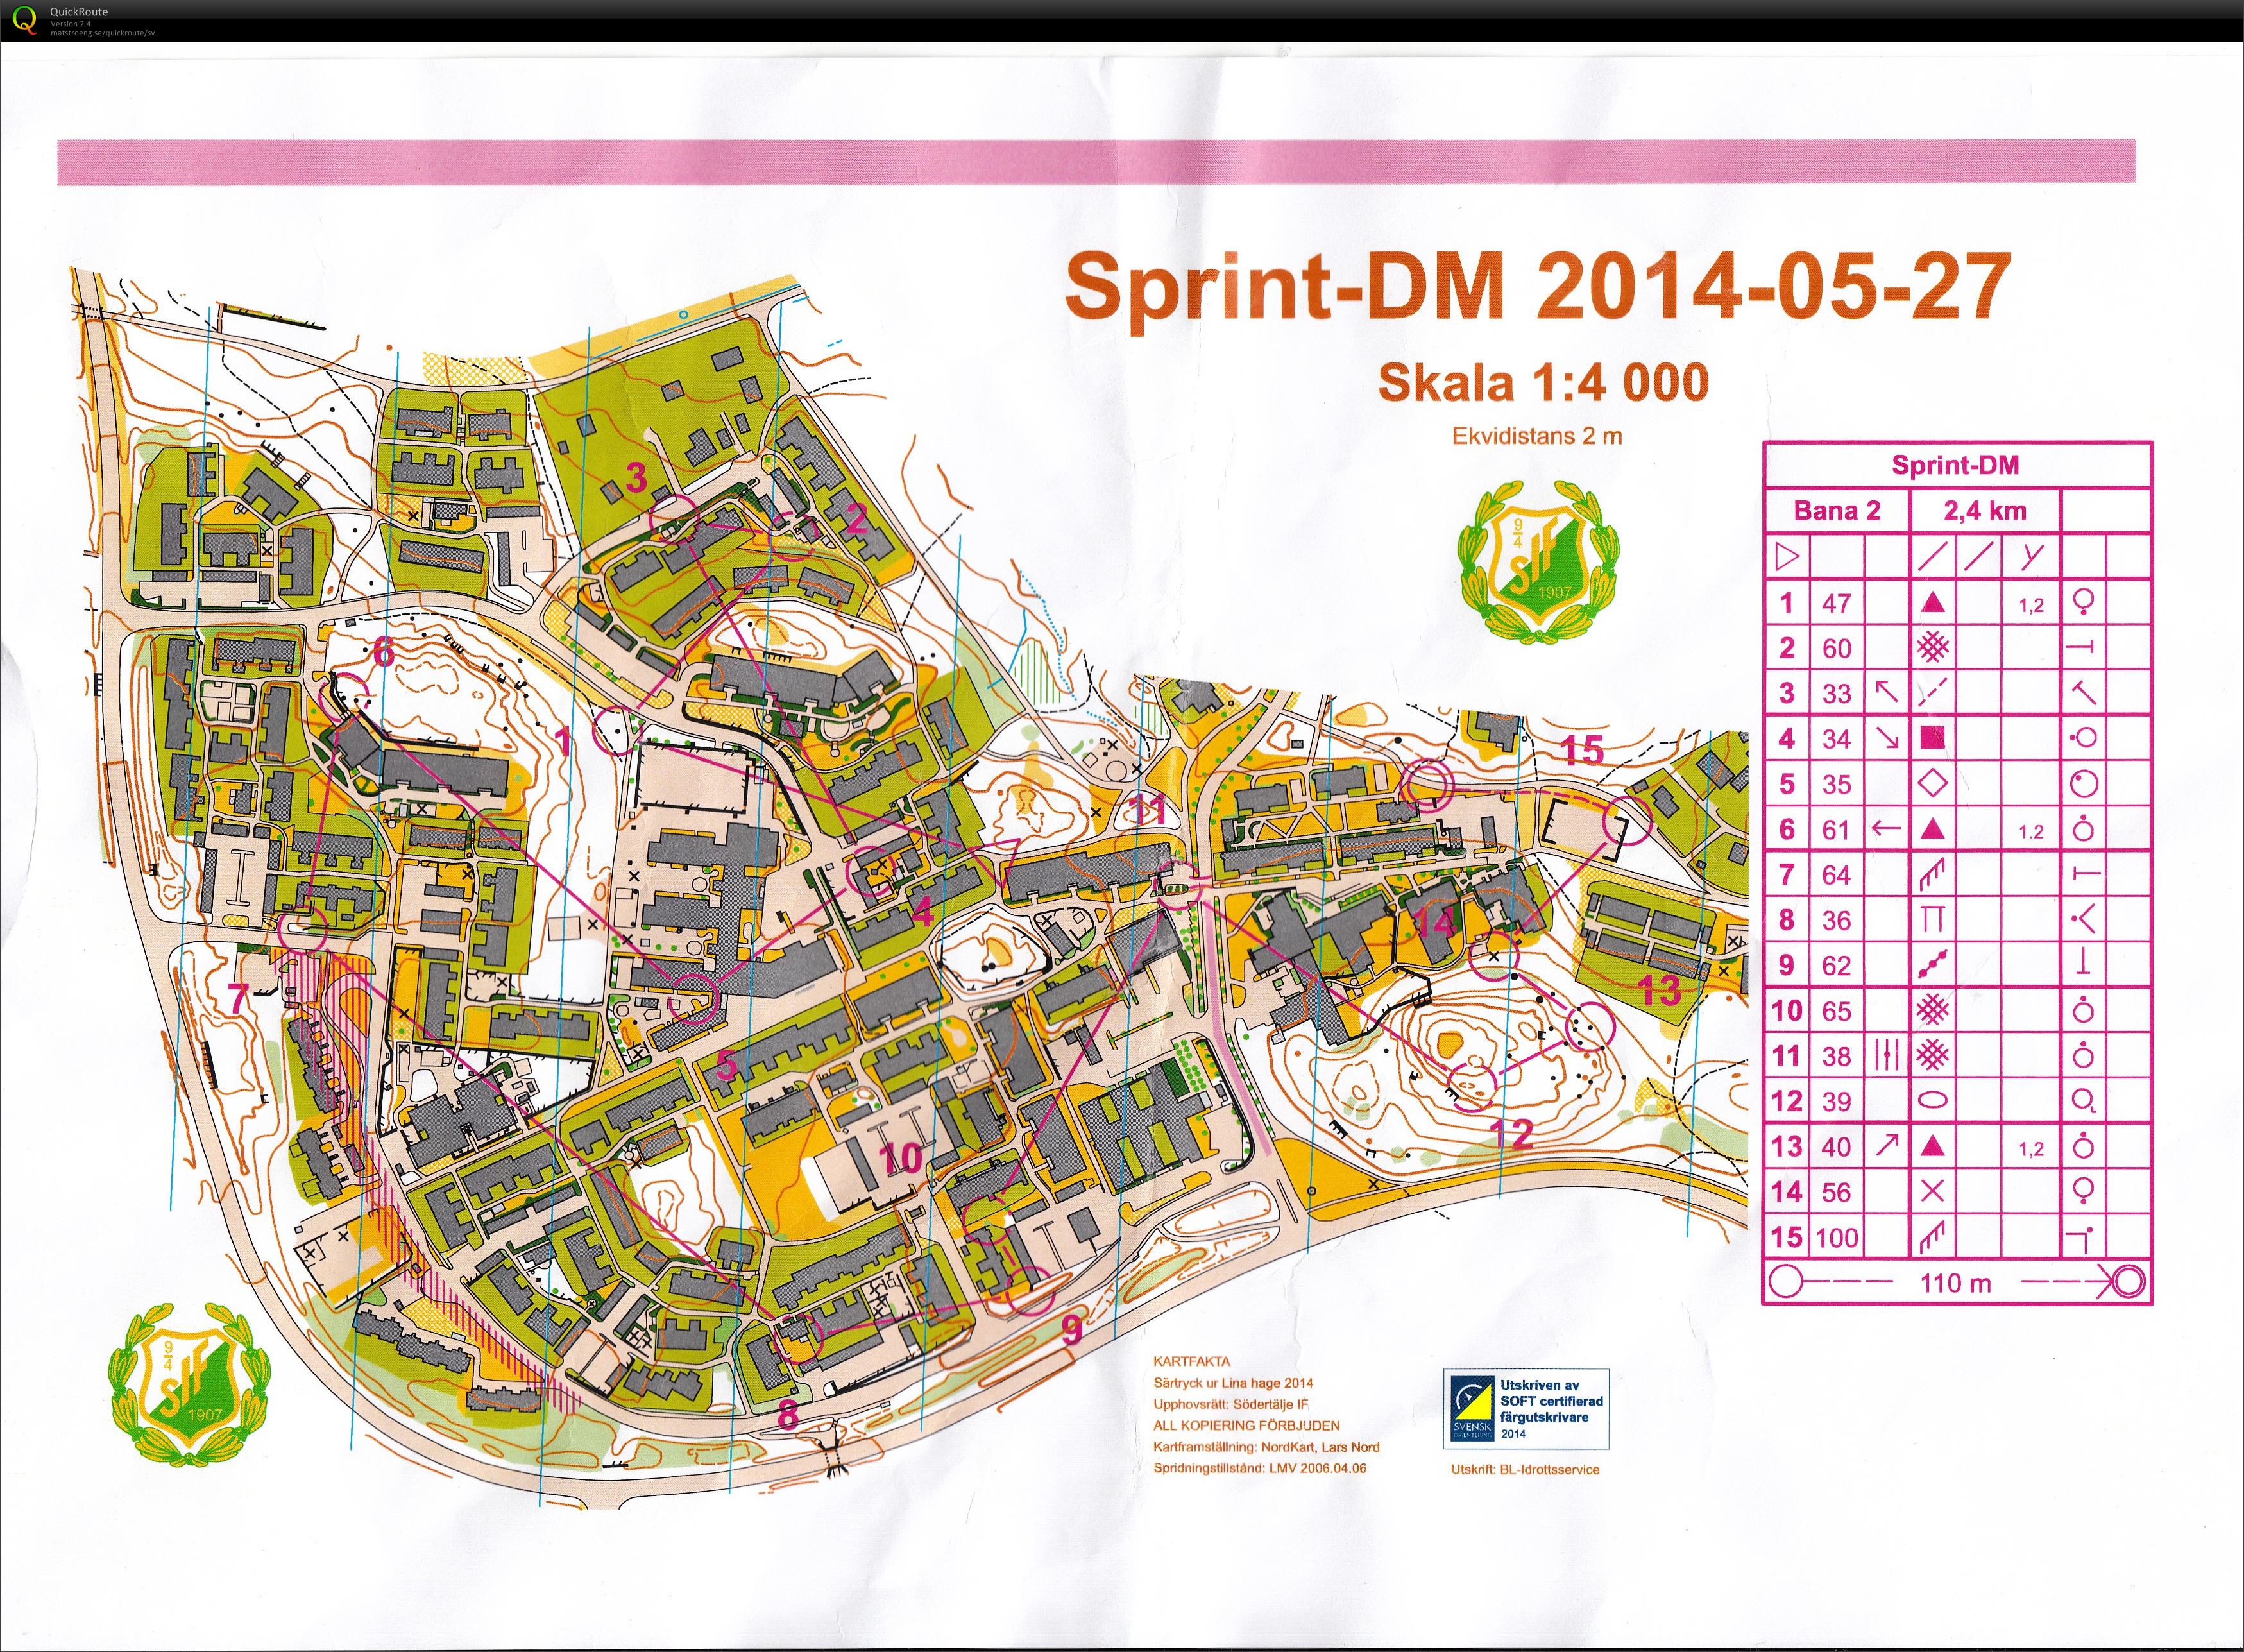 Sprint-DM (2014-05-27)